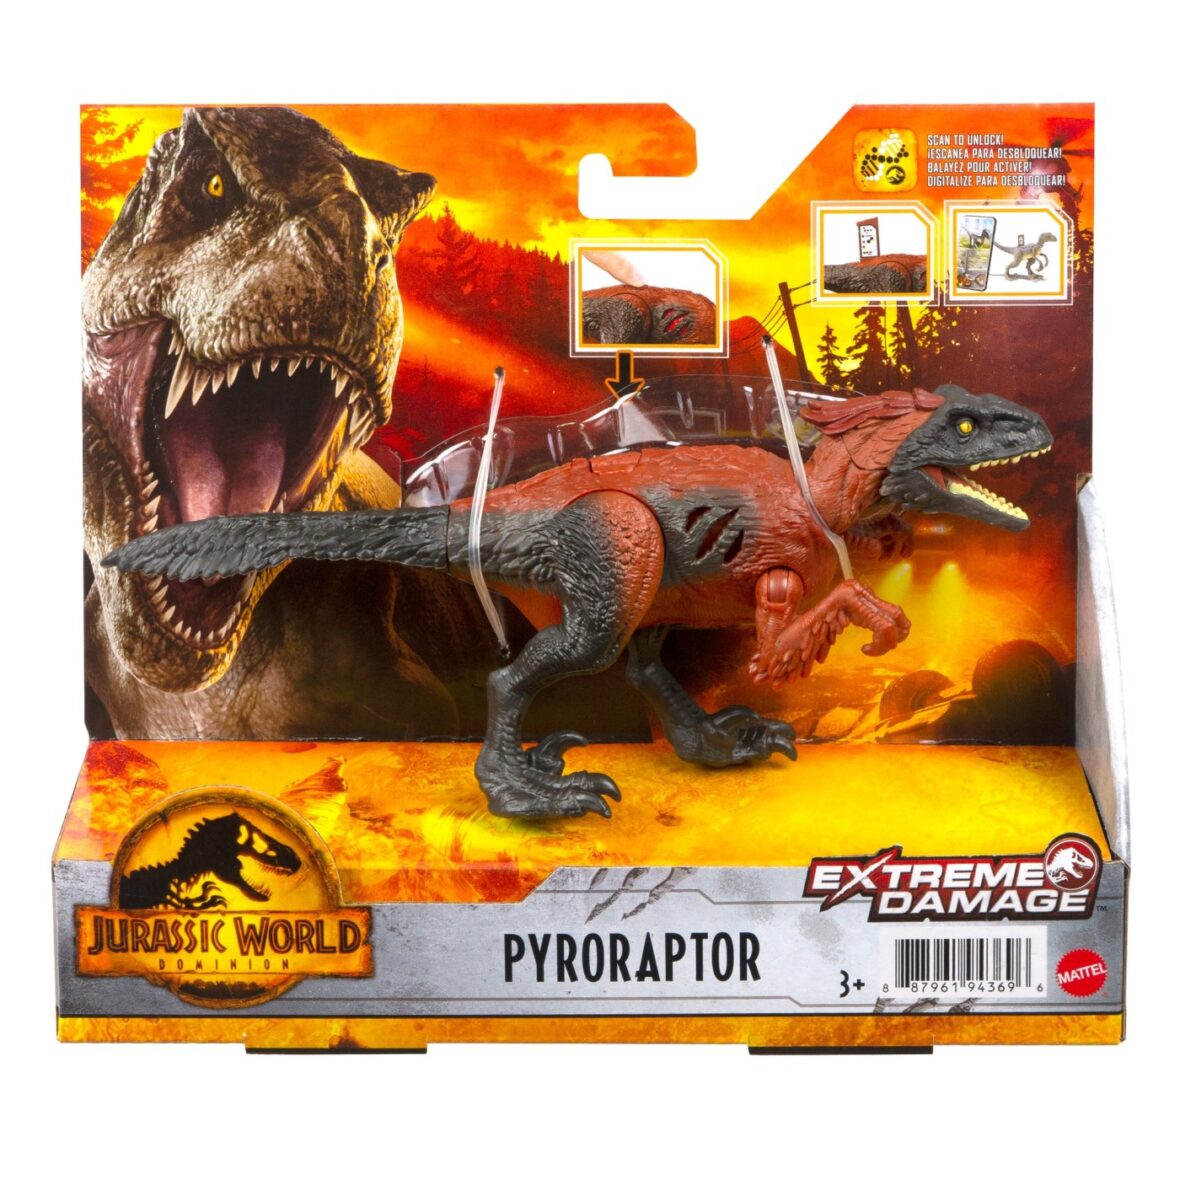 Jurassic World Extreme Damage Dinozaur Pyroraptor